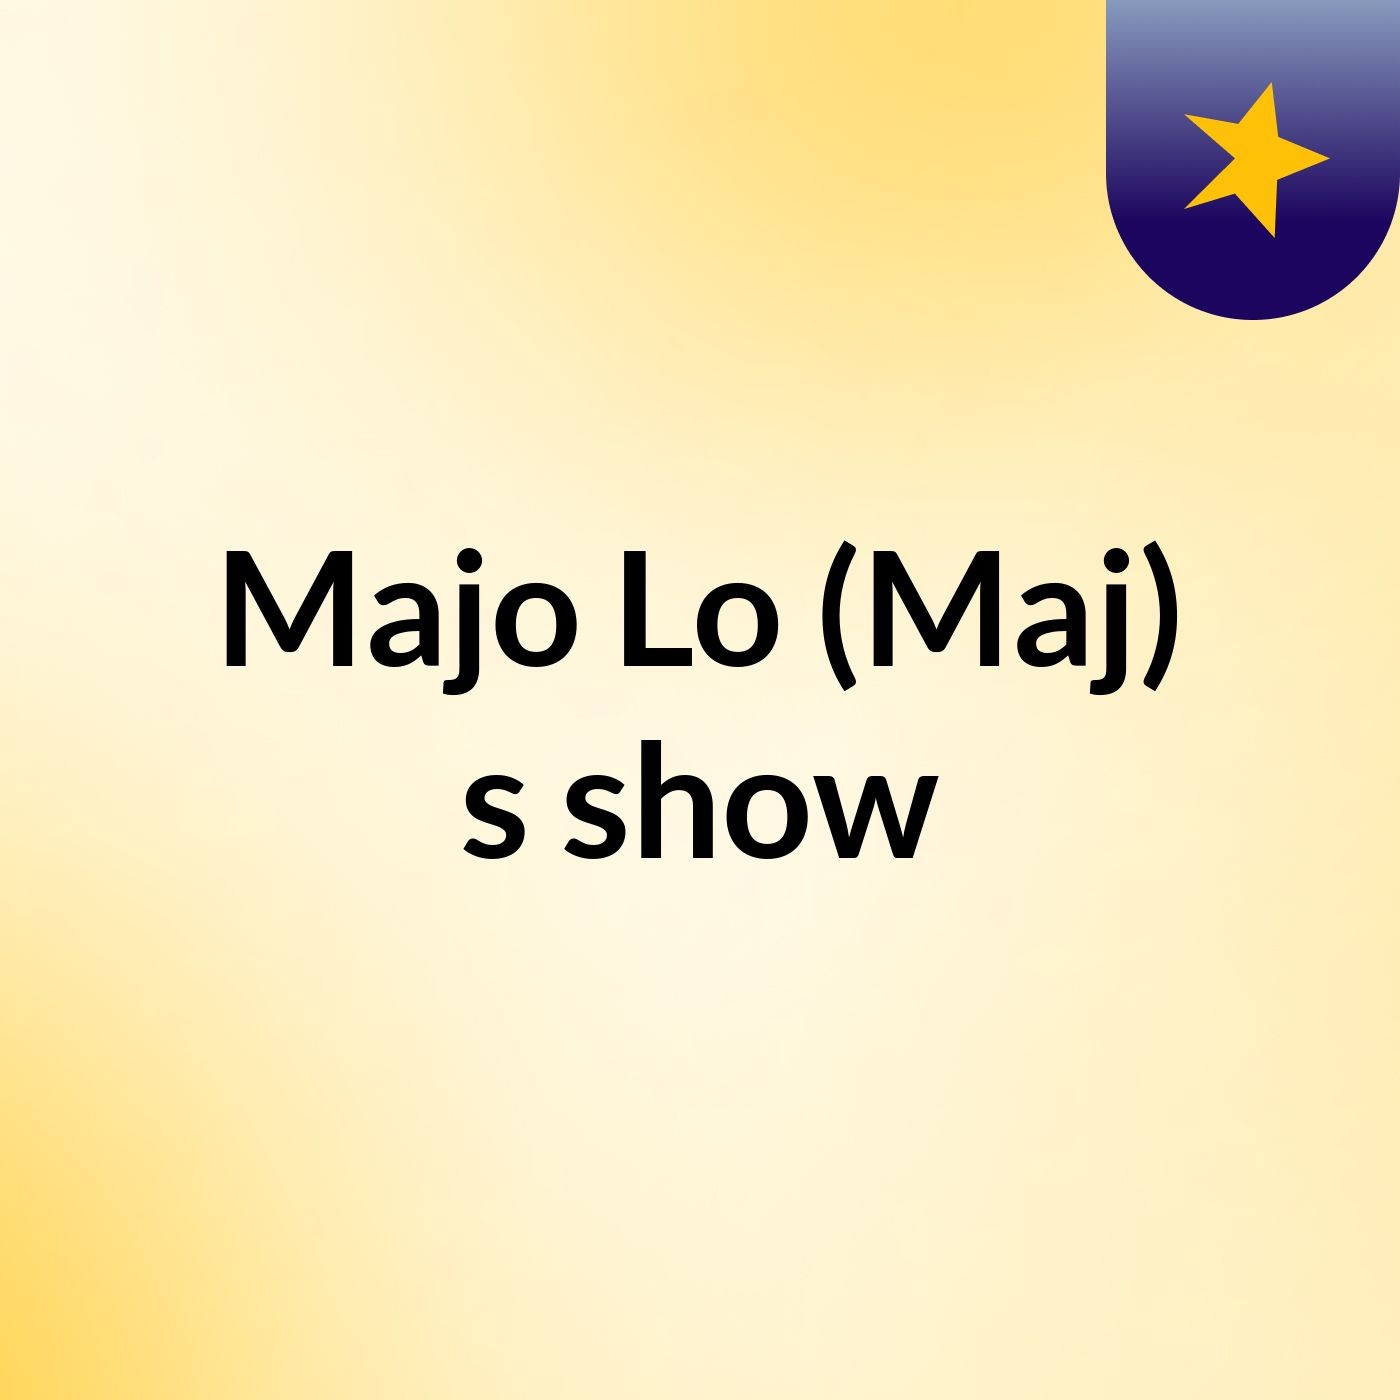 Majo Lo (Maj)'s show